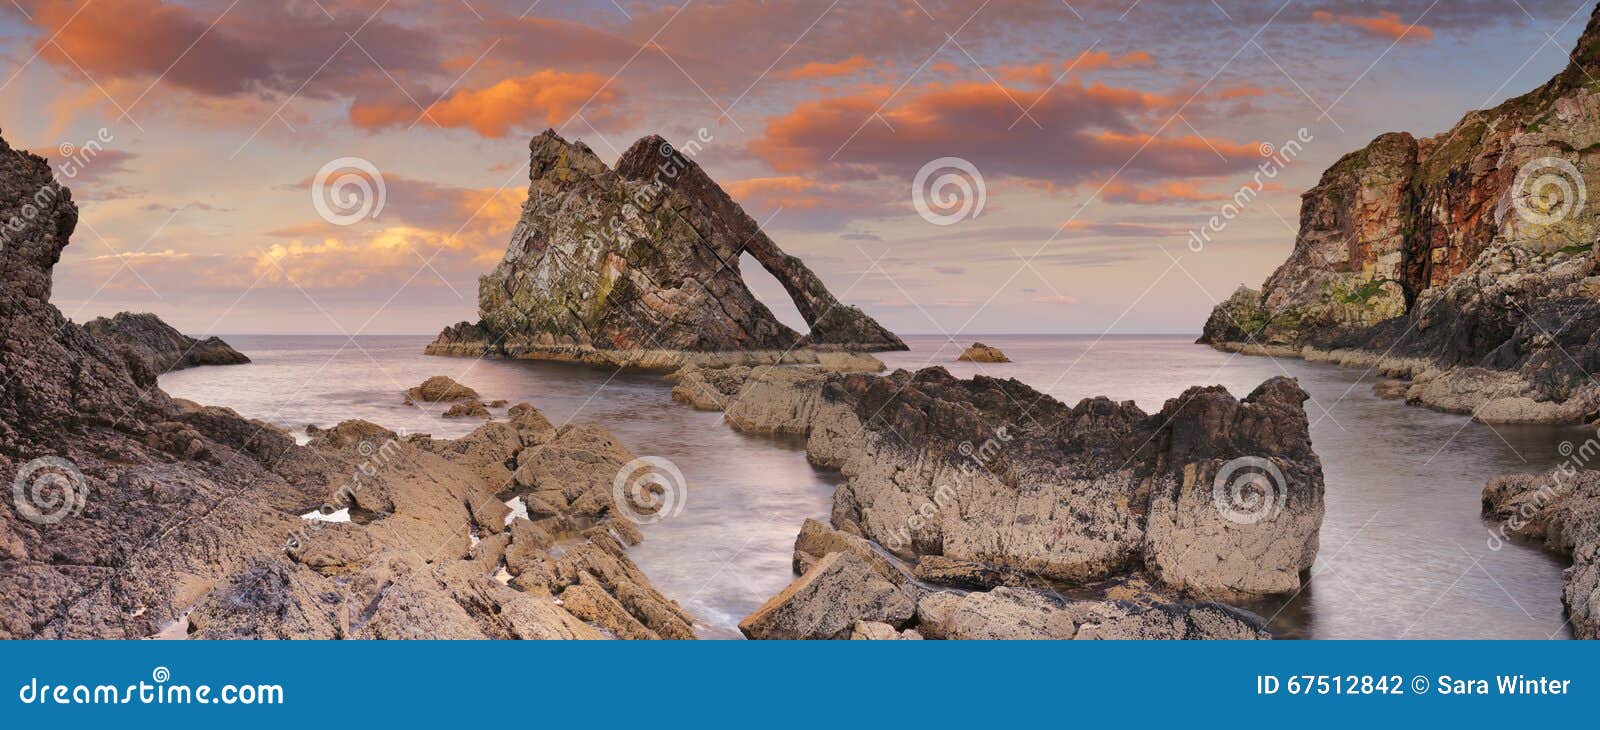 bow fiddle rock on the moray coast, scotland at sunset